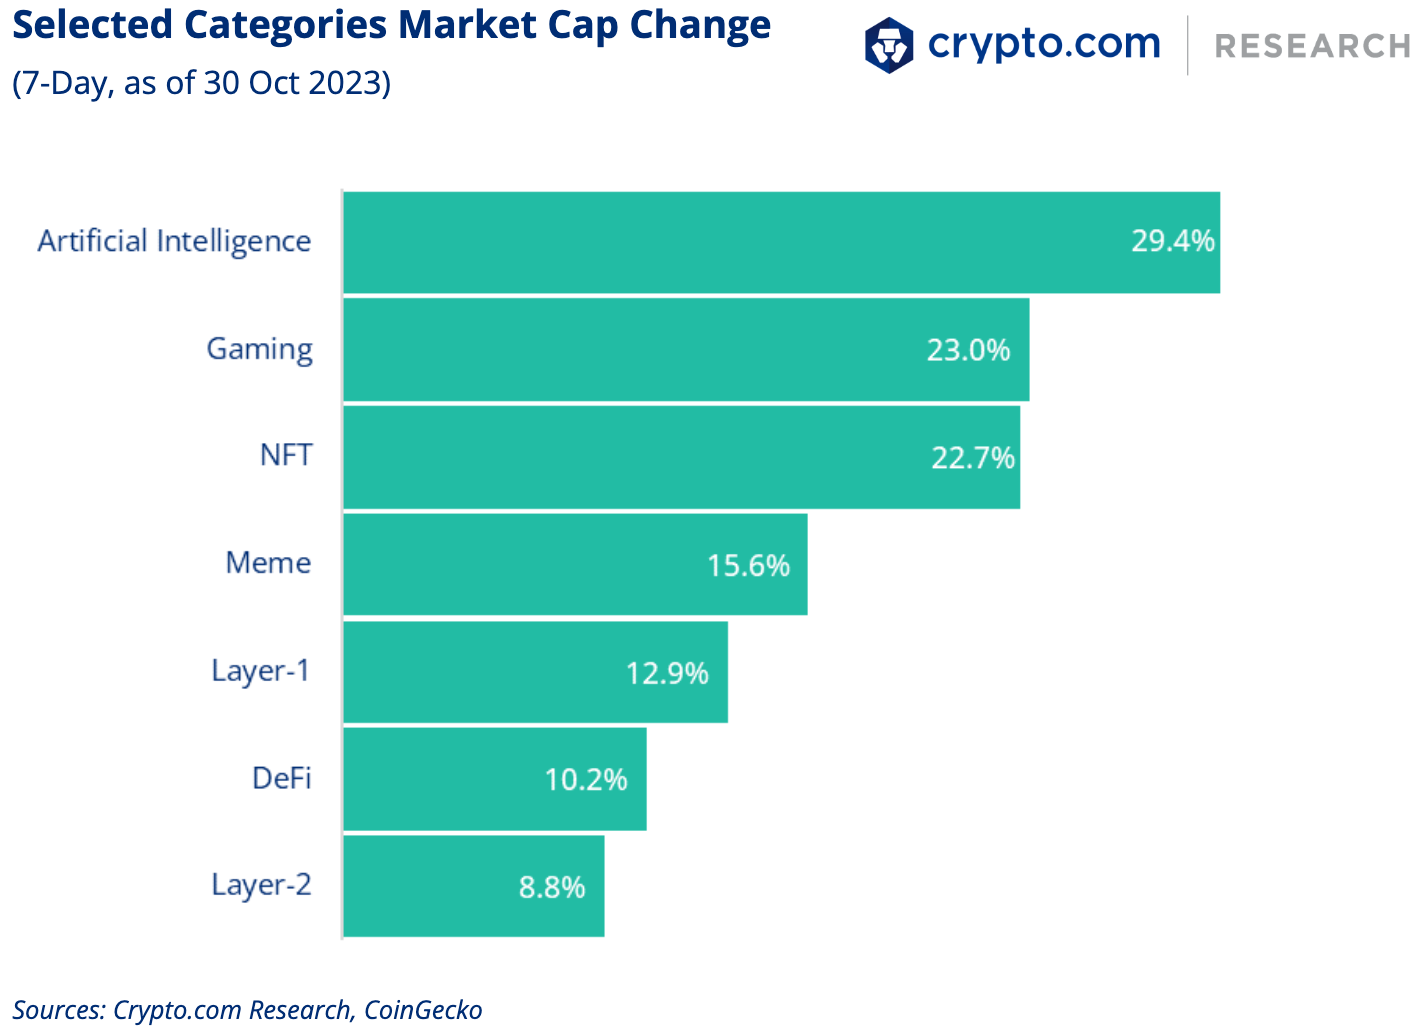 Crypto.com Selected Categories Market Cap Change